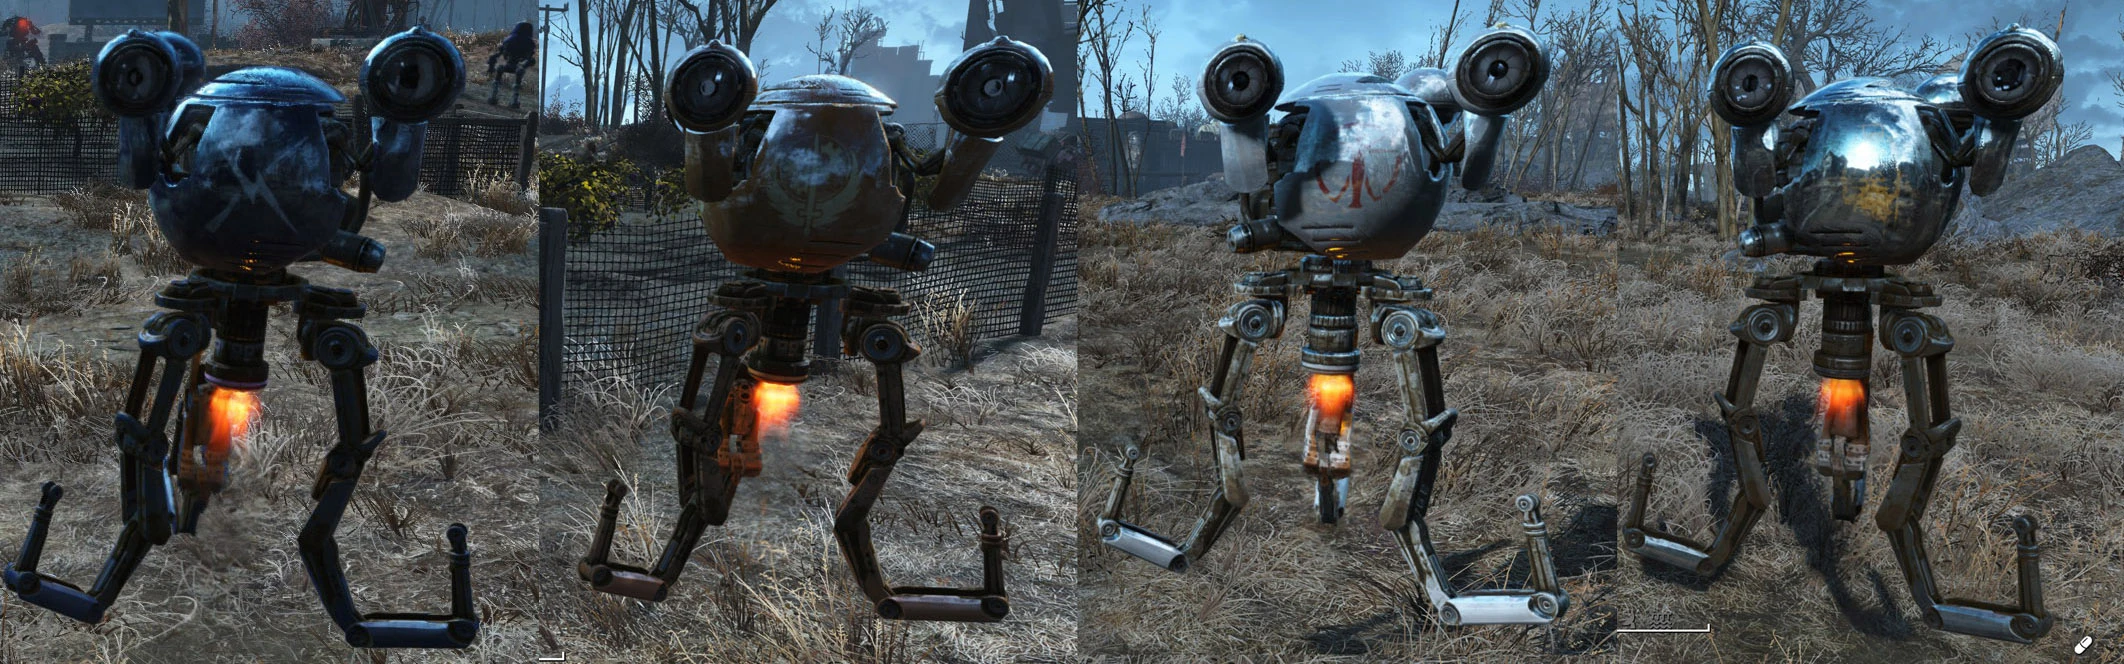 Fallout 4 automatron как создать робота фото 75